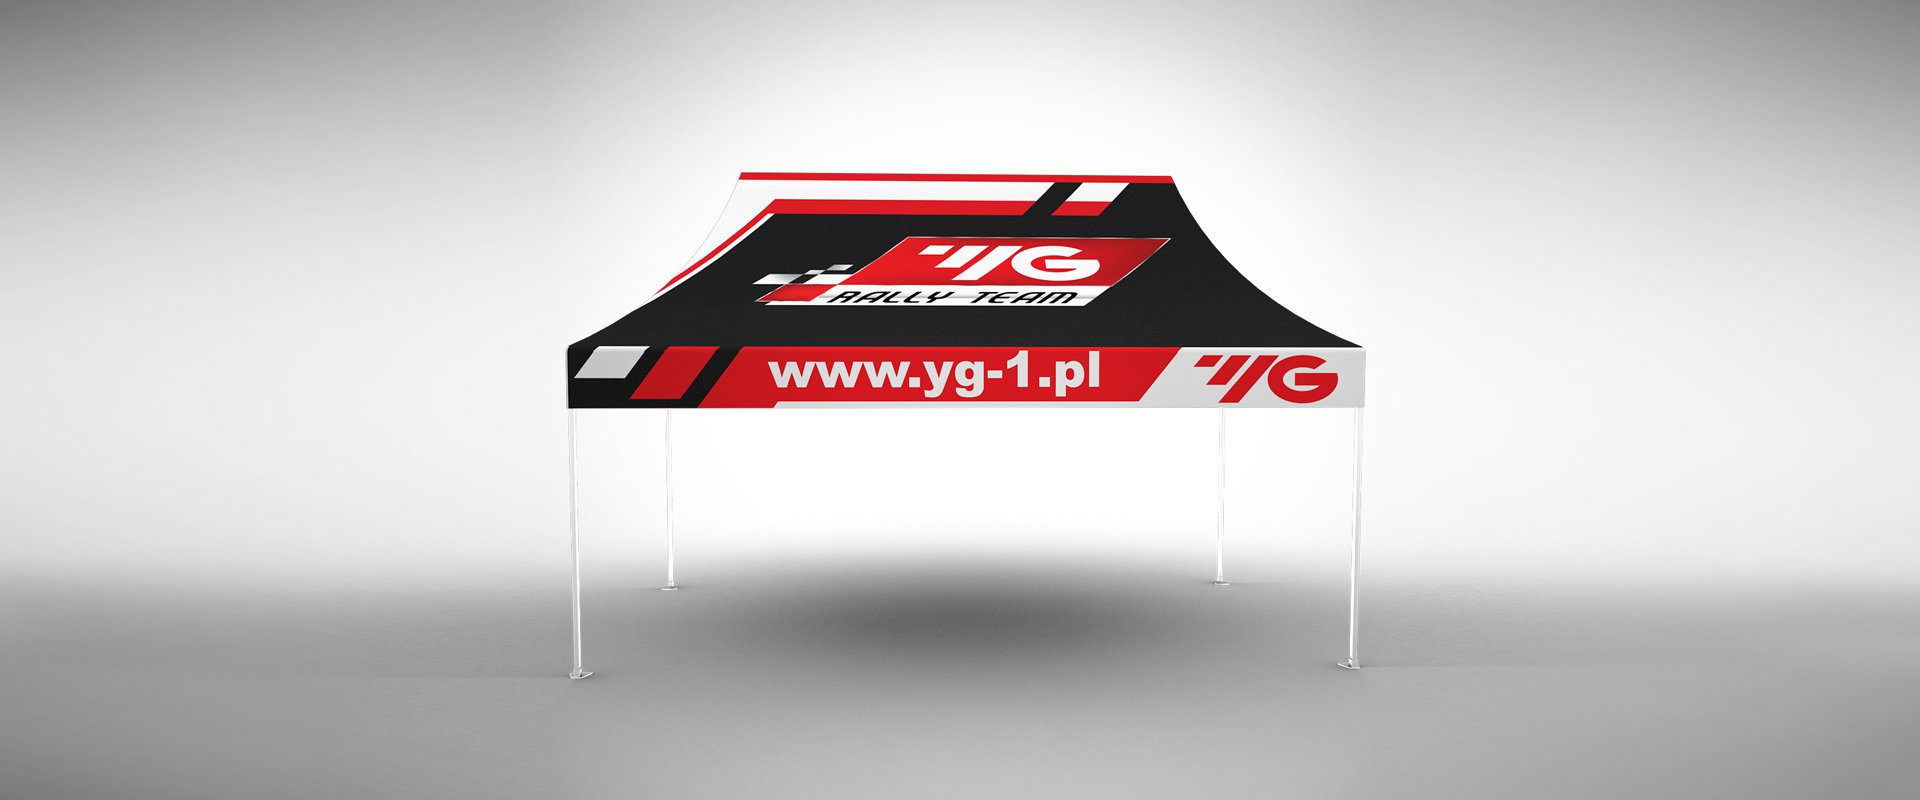 YG-1 Rally Team #1